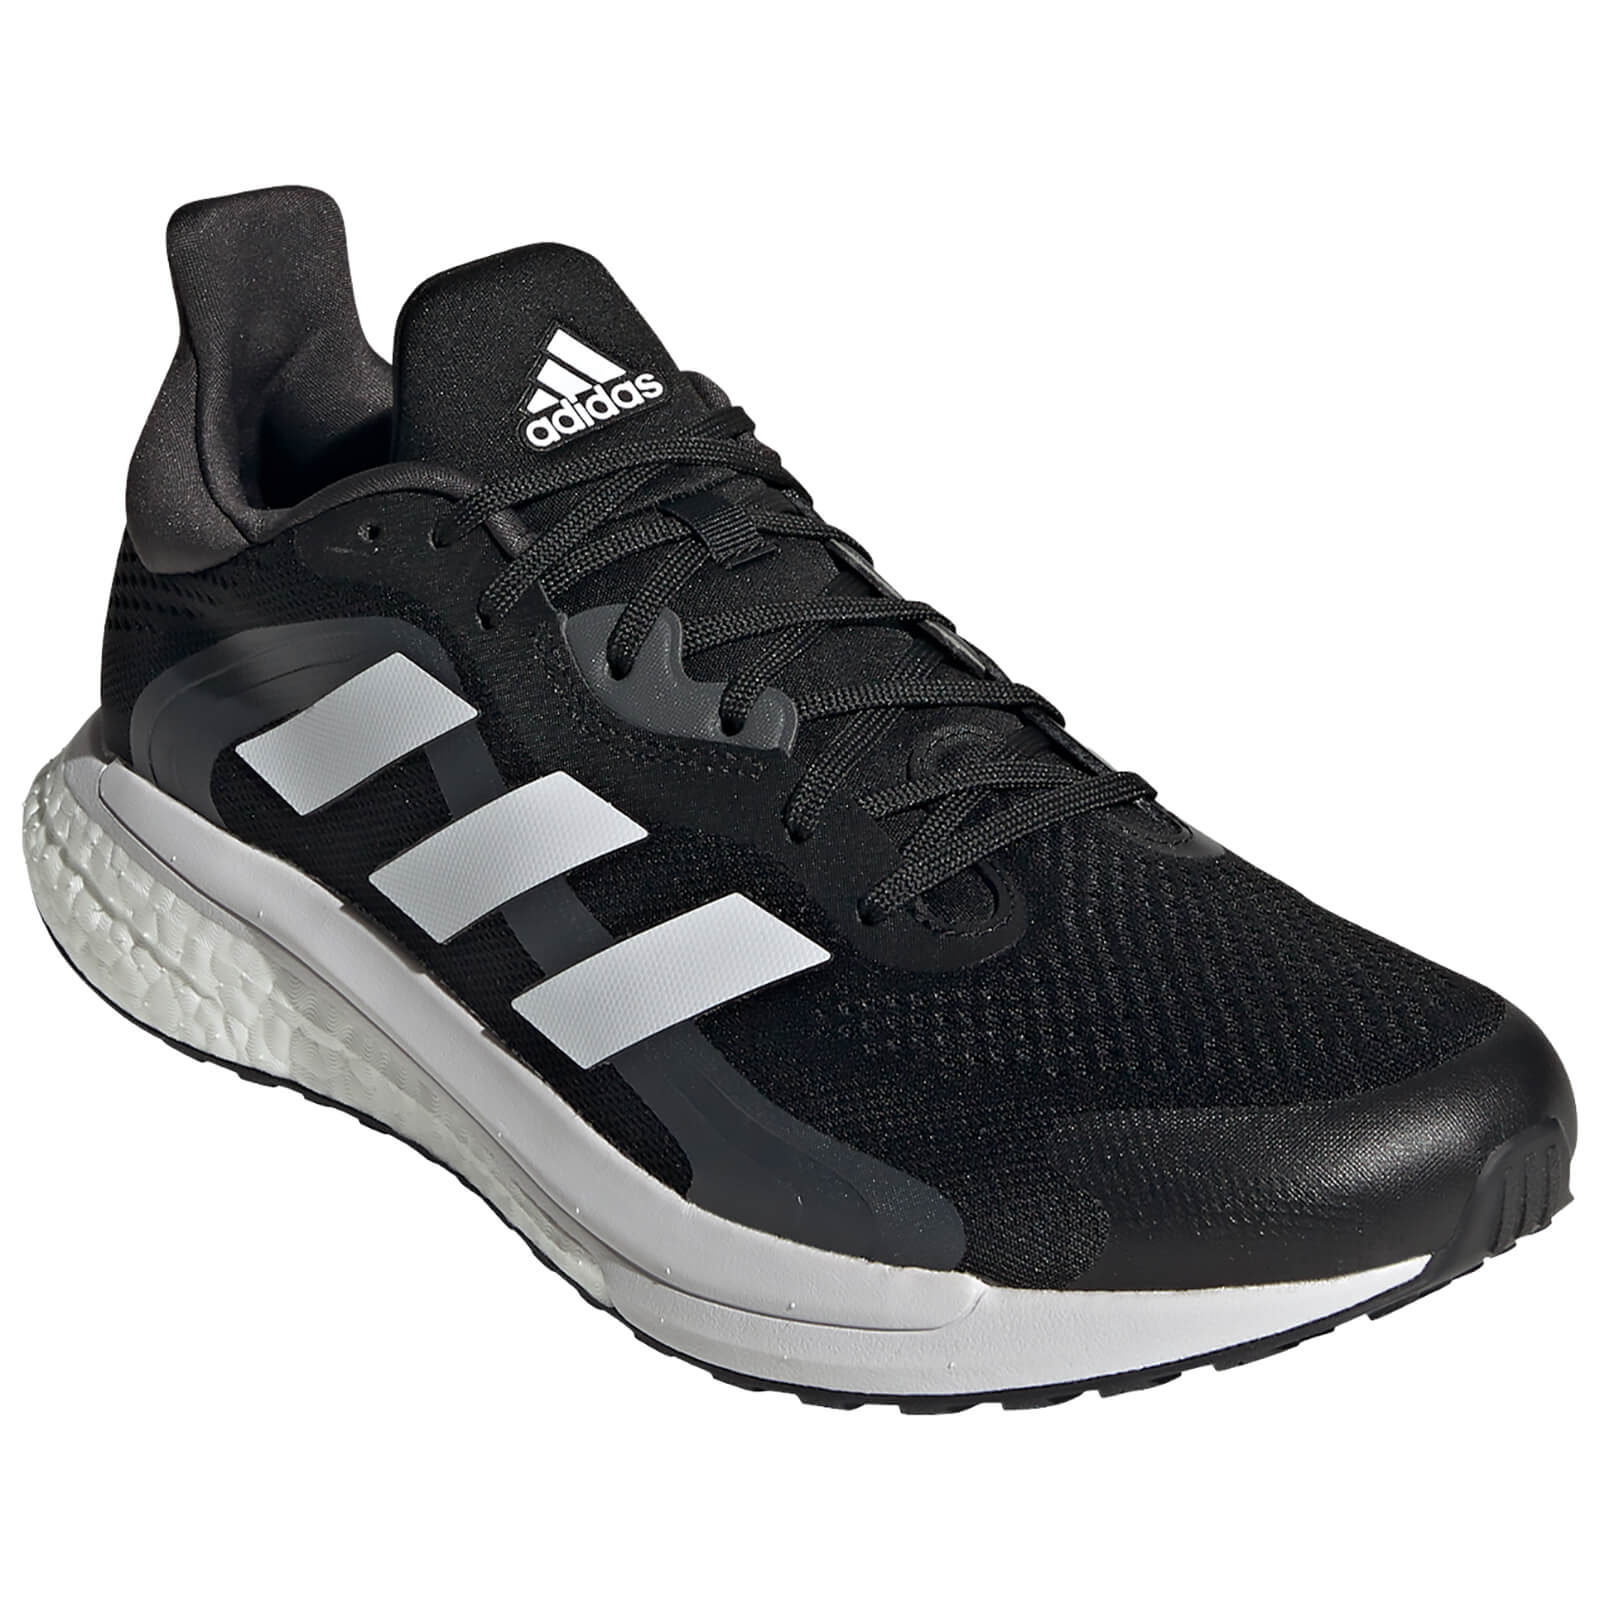 adidas Solar Glide 4 ST Running Shoes - Core Black/Ftwr White/Grey Six - US 8.5/UK 8